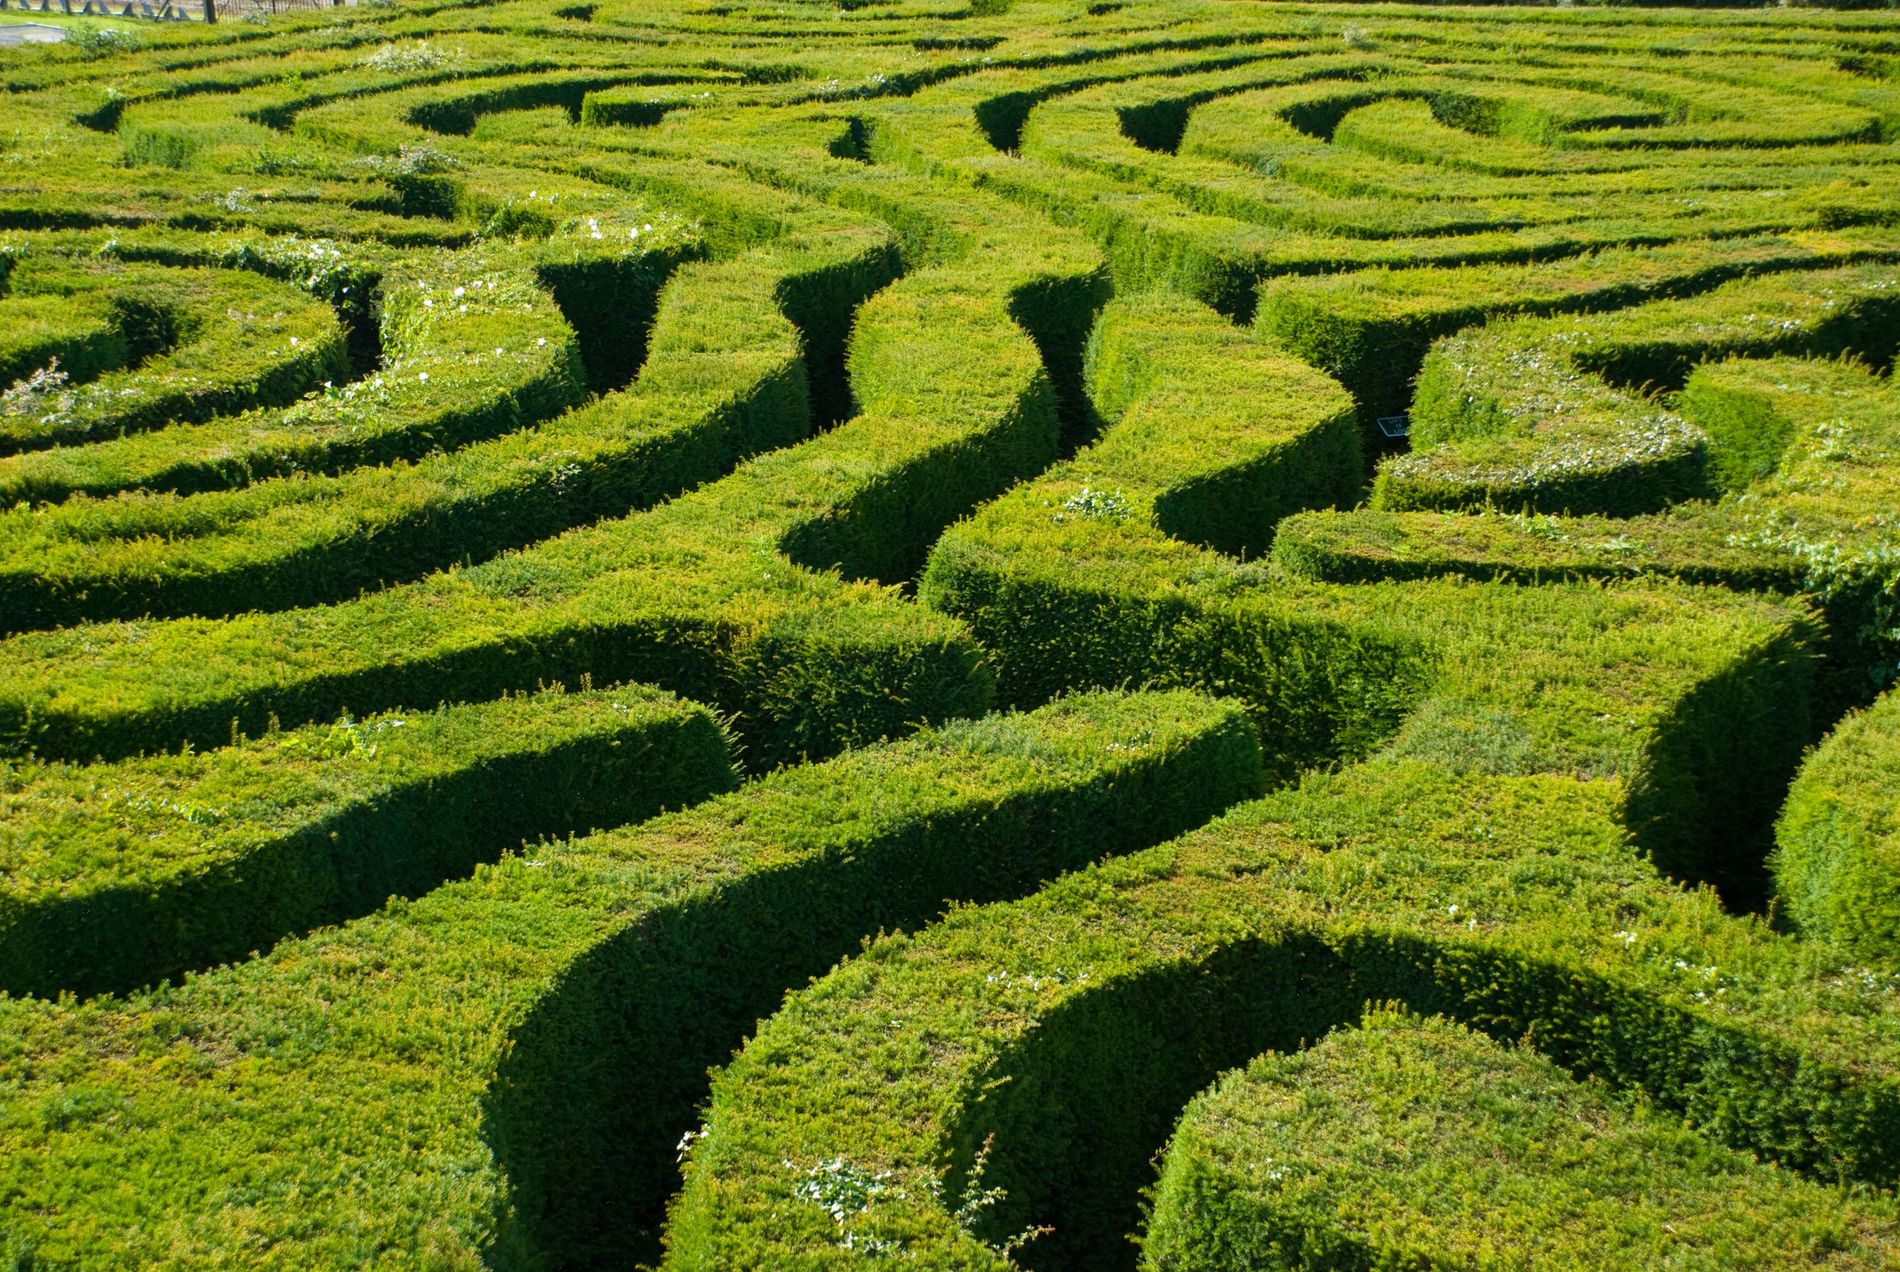 Lost in Labyrinths: My Maze Adventure